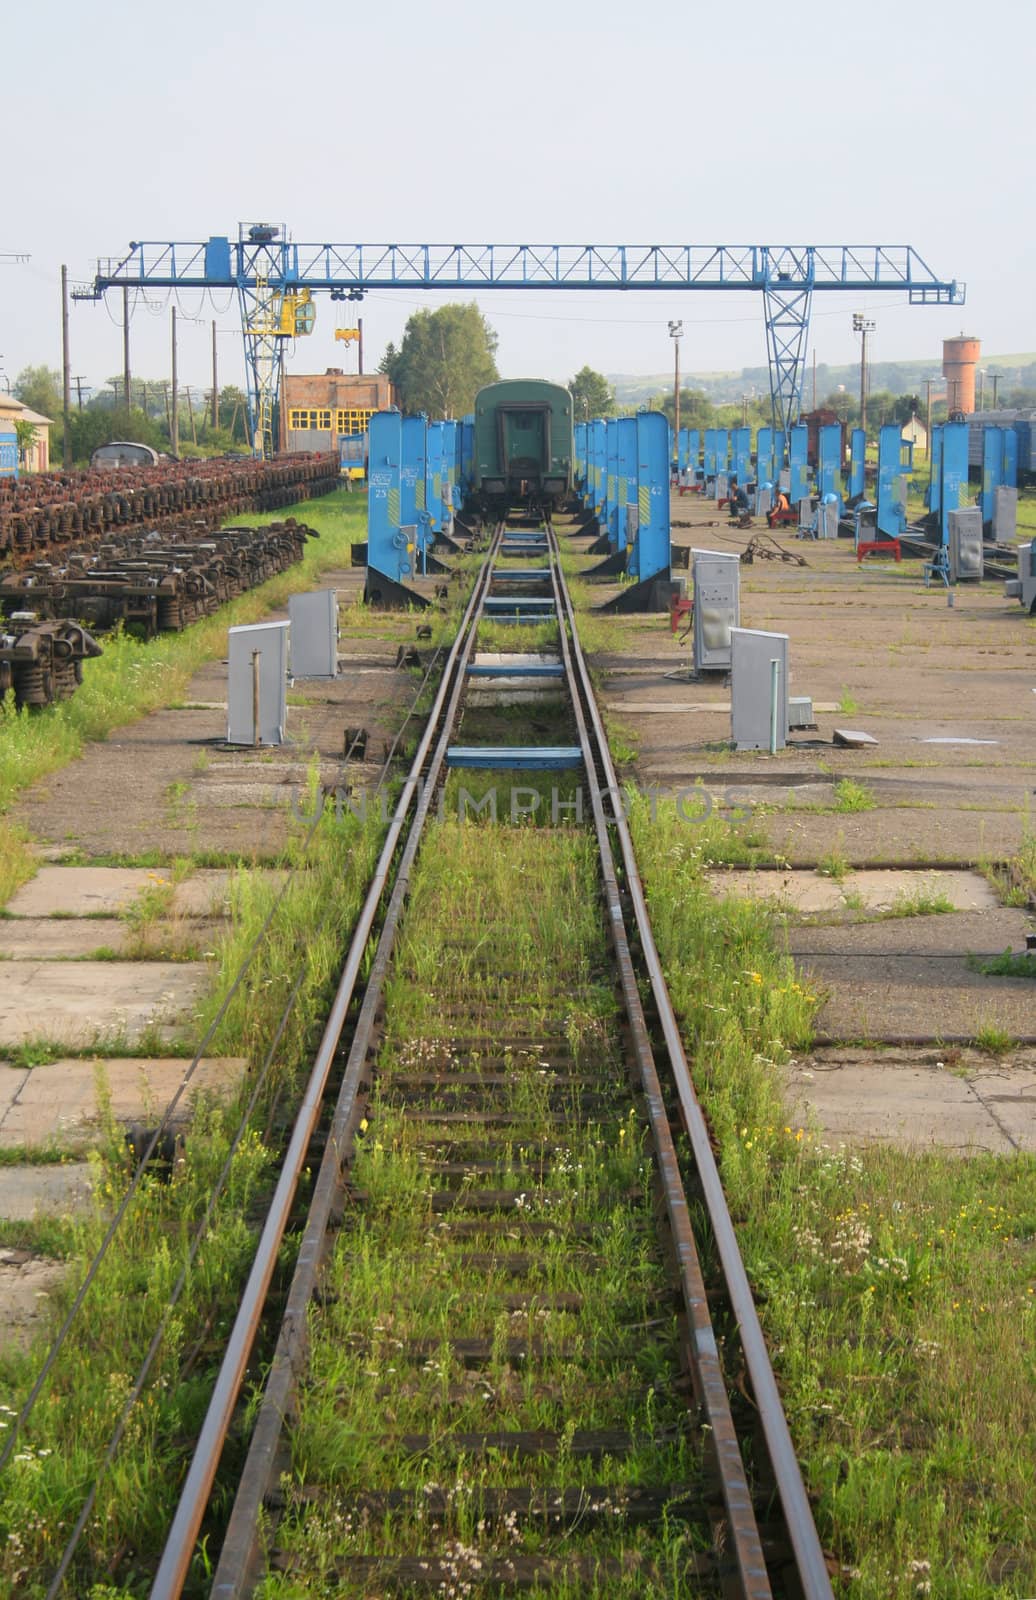 Train repair yard by timscottrom